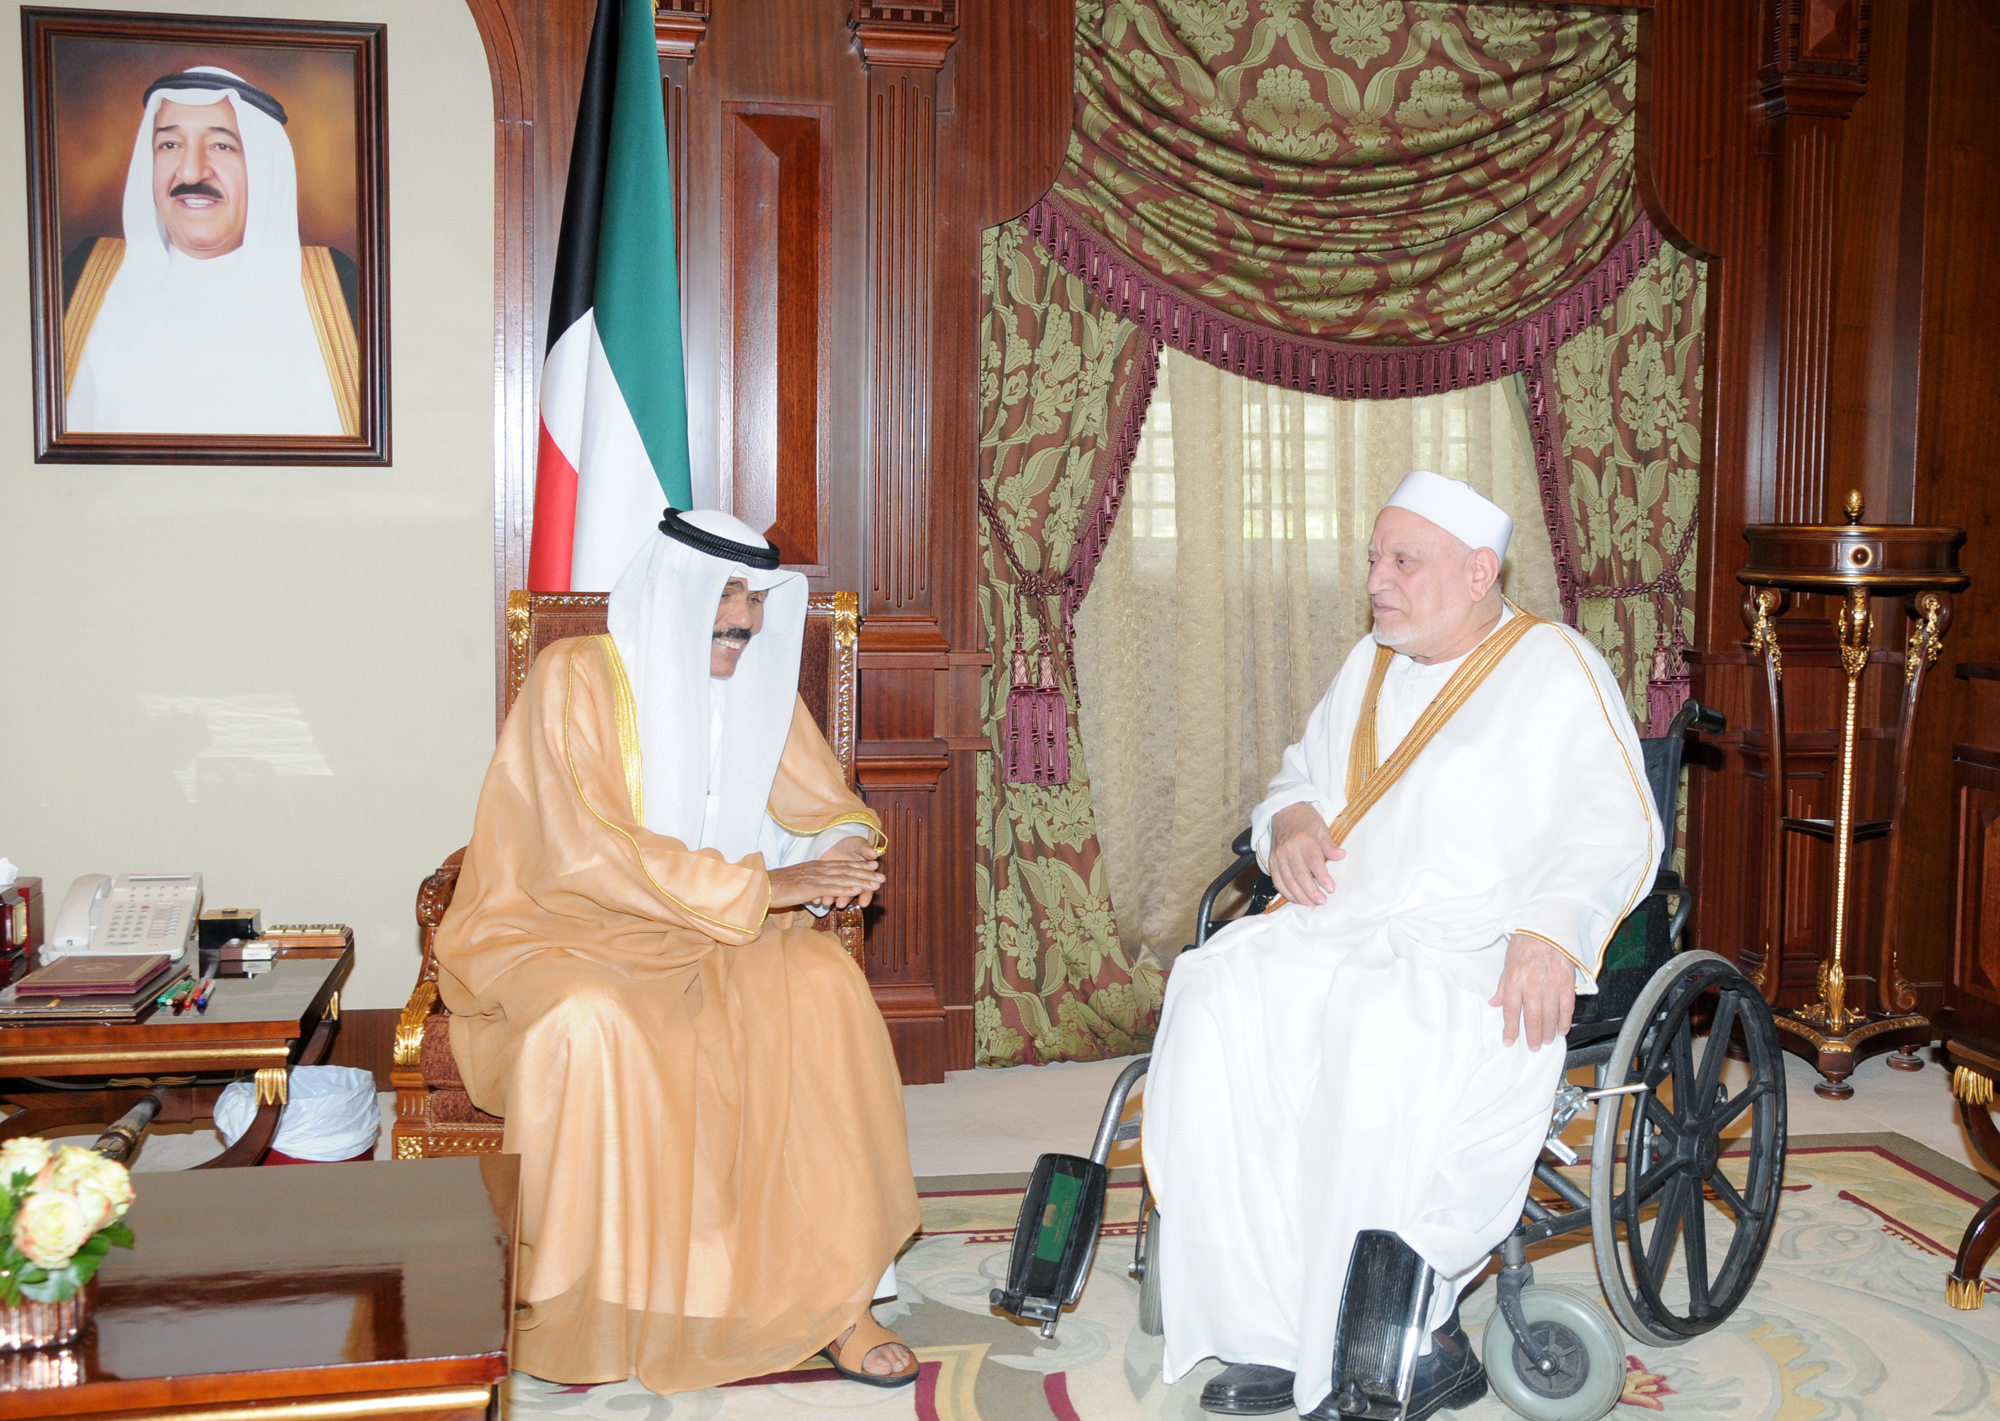 H.H the Crown Prince received the head of Al-Azhar University Dr. Ahmad Omar Hashim